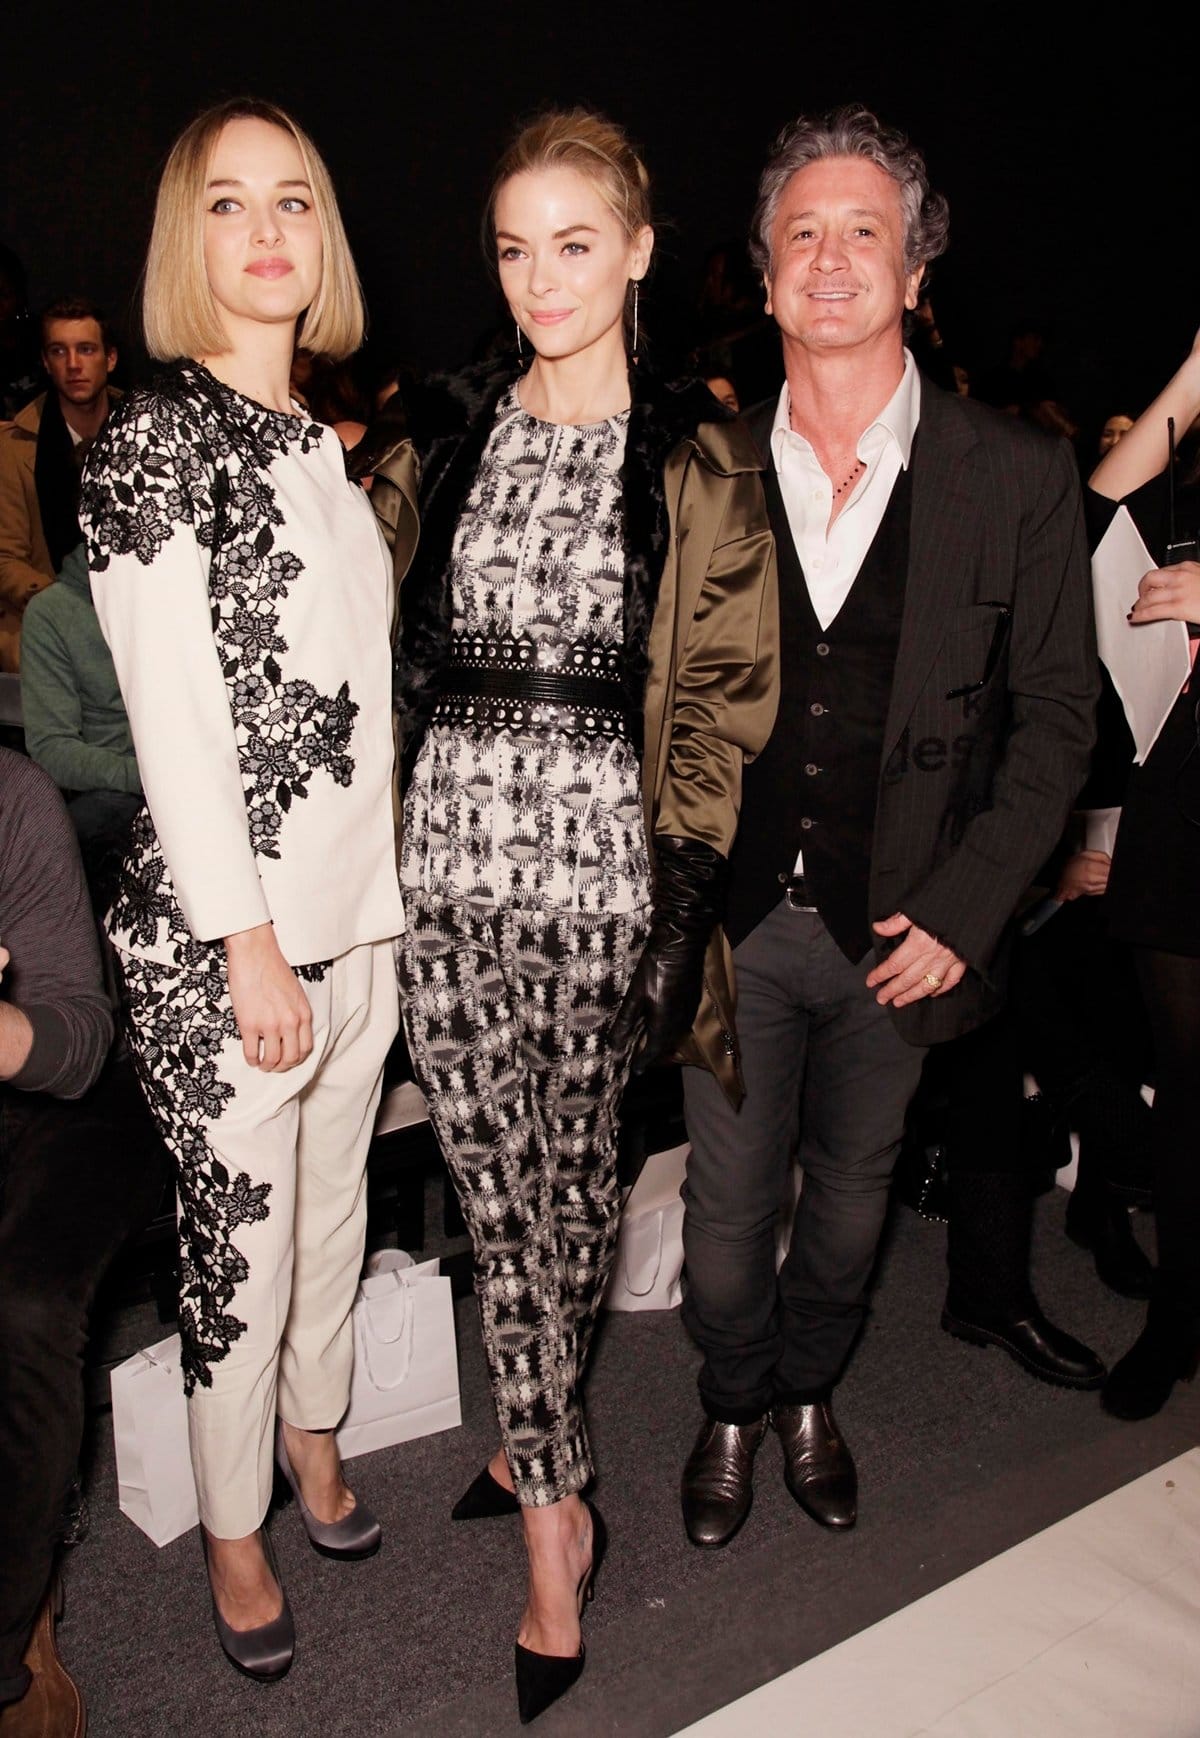 Actress Jess Weixler, actress Jaime King, and shoe designer Jean-Michel Cazabat attend the Lela Rose Fall 2013 Mercedes-Benz Fashion Show